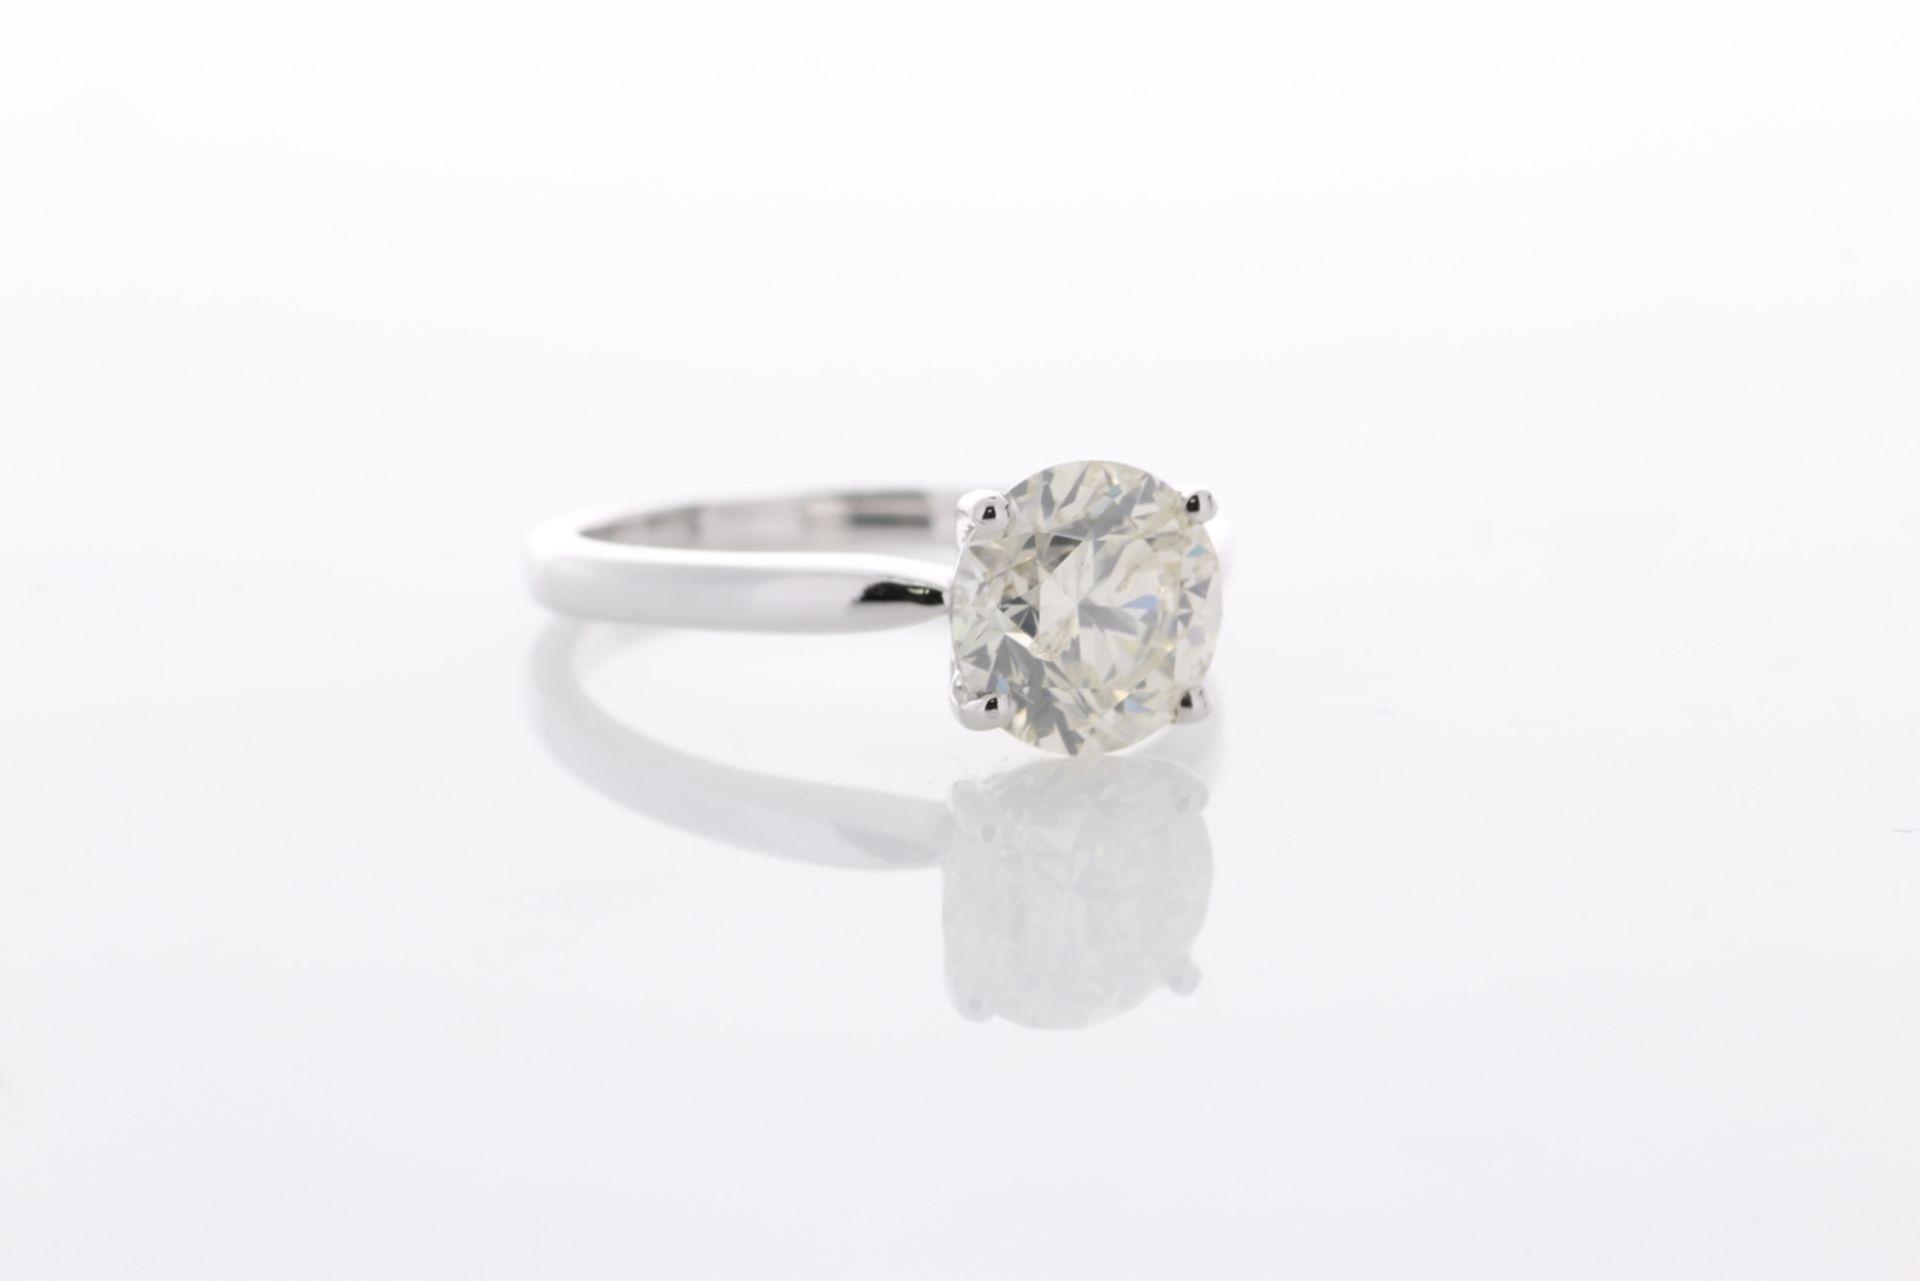 18ct White Gold Single Stone Prong Set Diamond Ring 2.02 Carats - Valued by IDI £45,675.00 - 18ct - Image 4 of 5